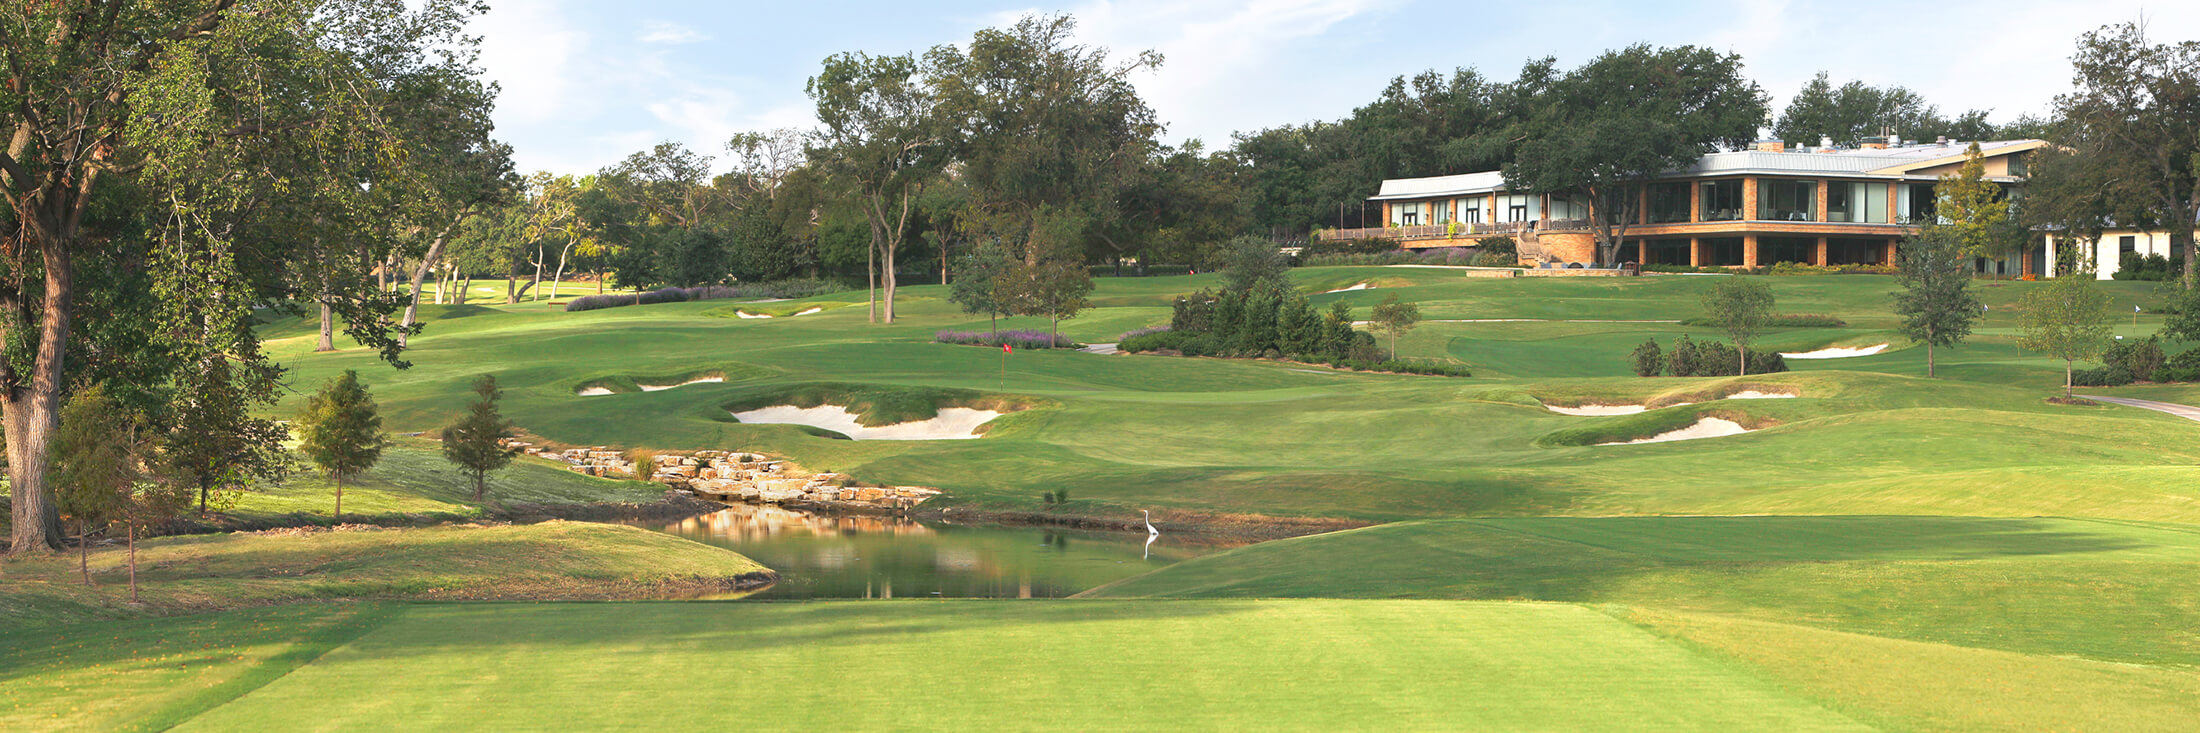 Golf Course Image - Northwood Club No. 16